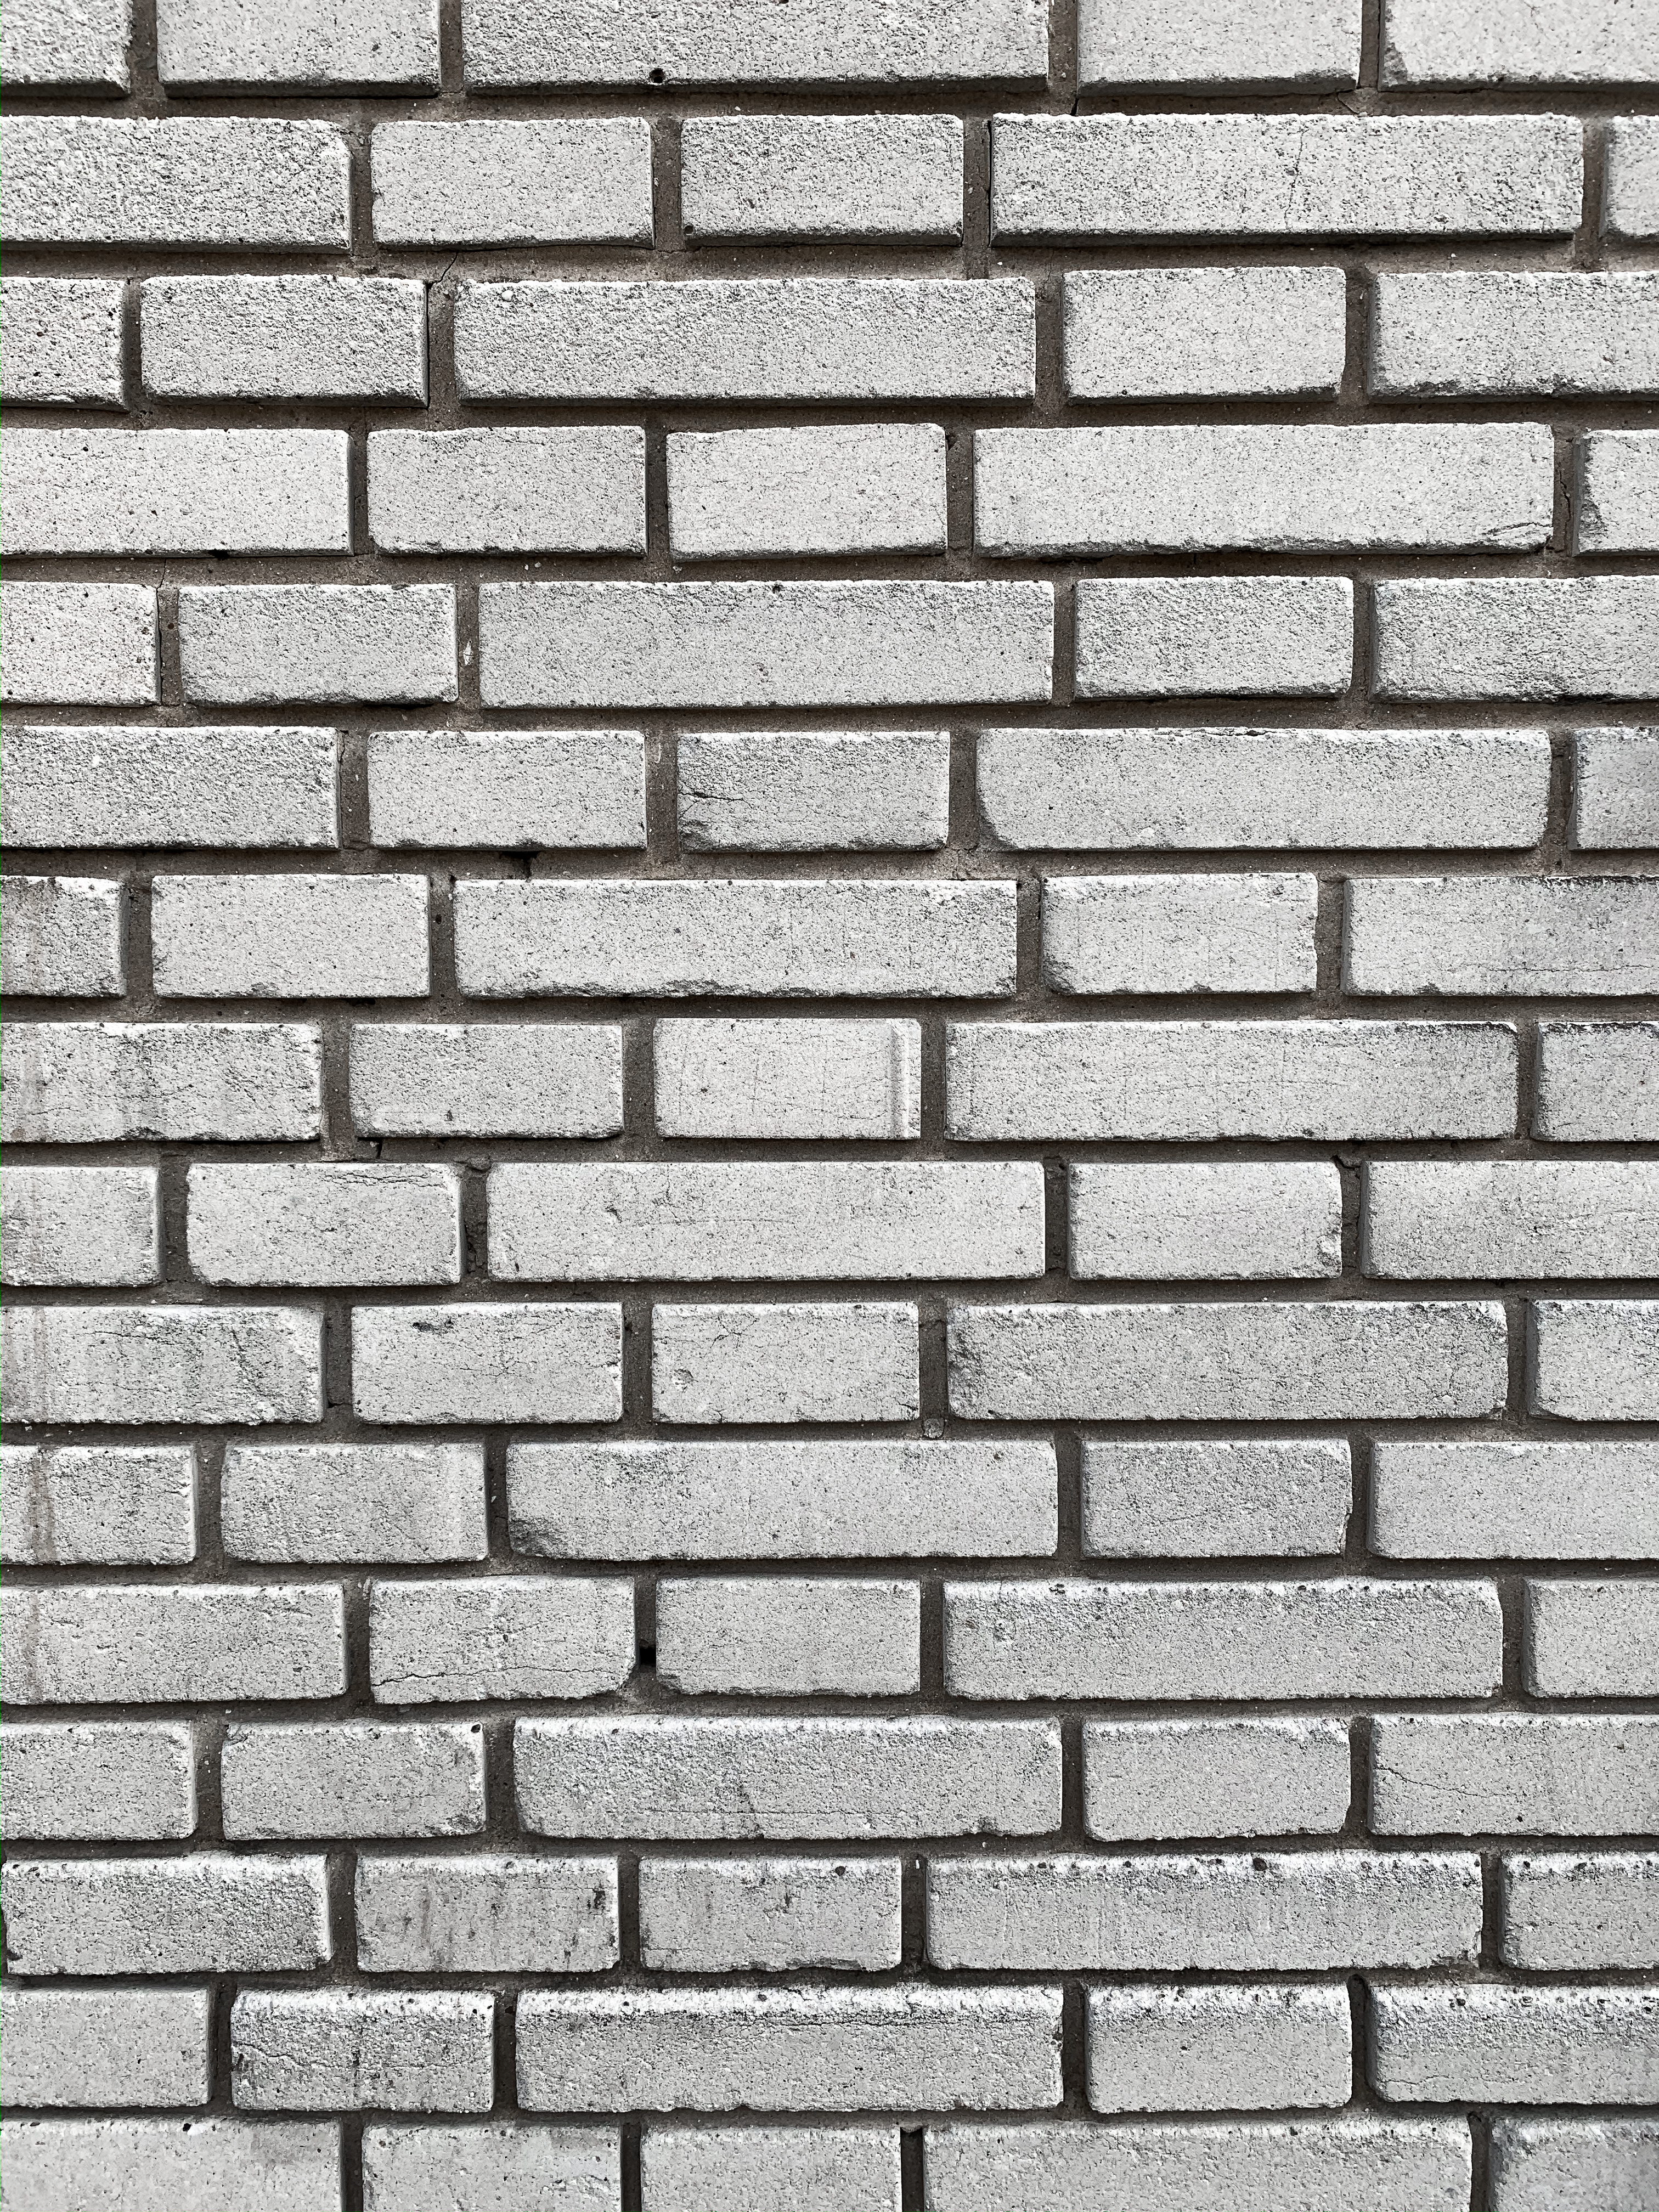 Gray Brick Wall Background Free Stock Photo | picjumbo